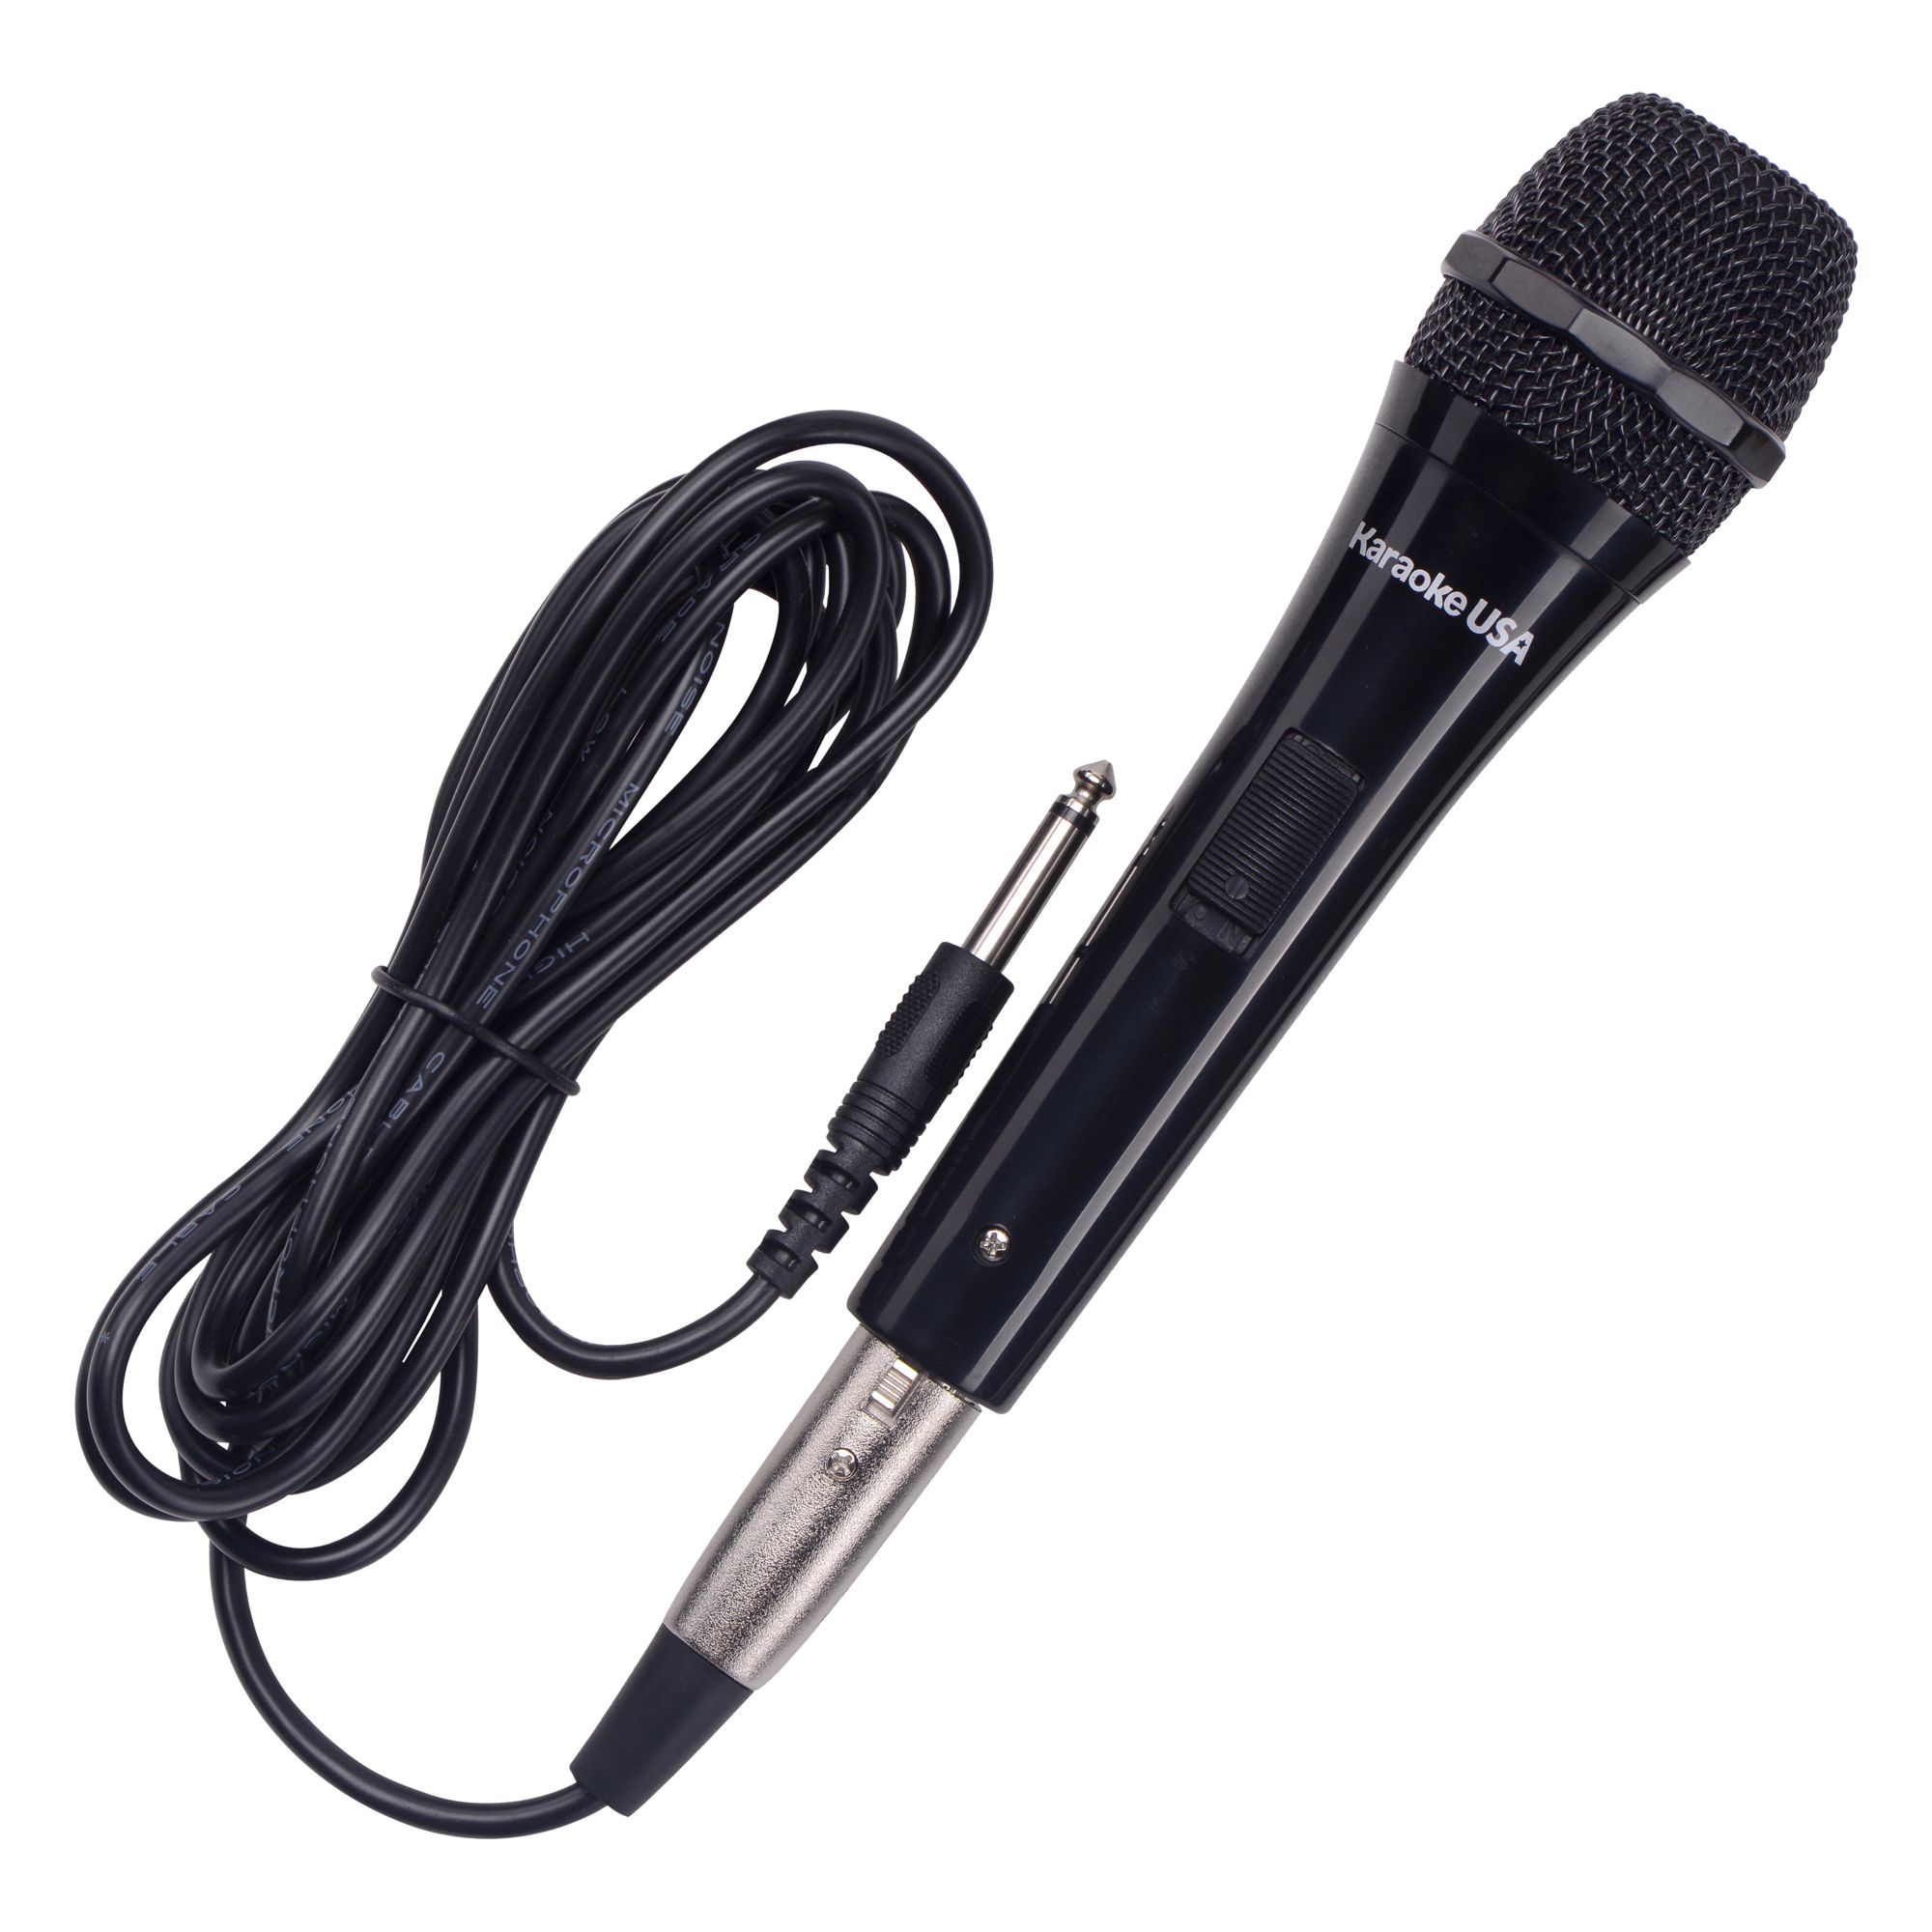 M189 - Professional Dynamic Microphone (Detachable Cord)